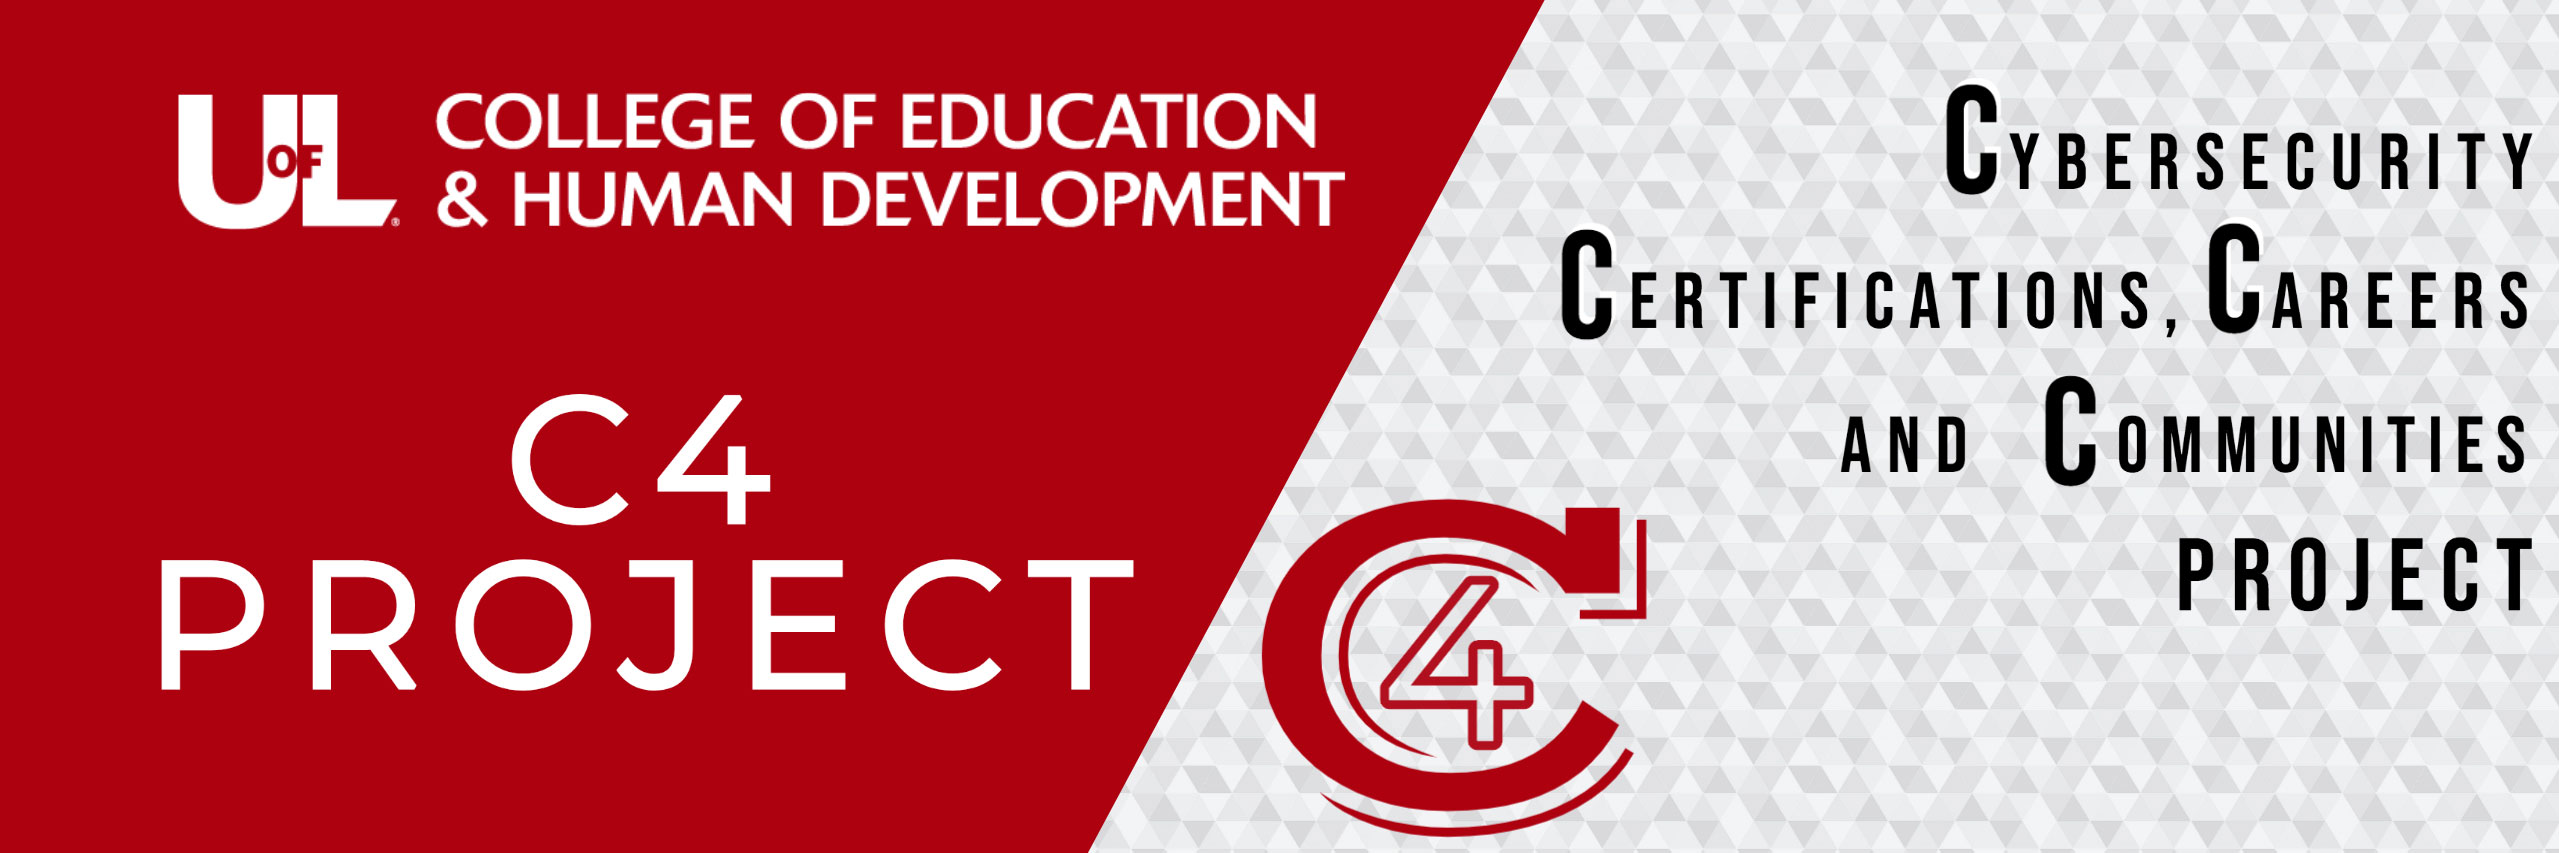 C4-project-new-logo.jpg